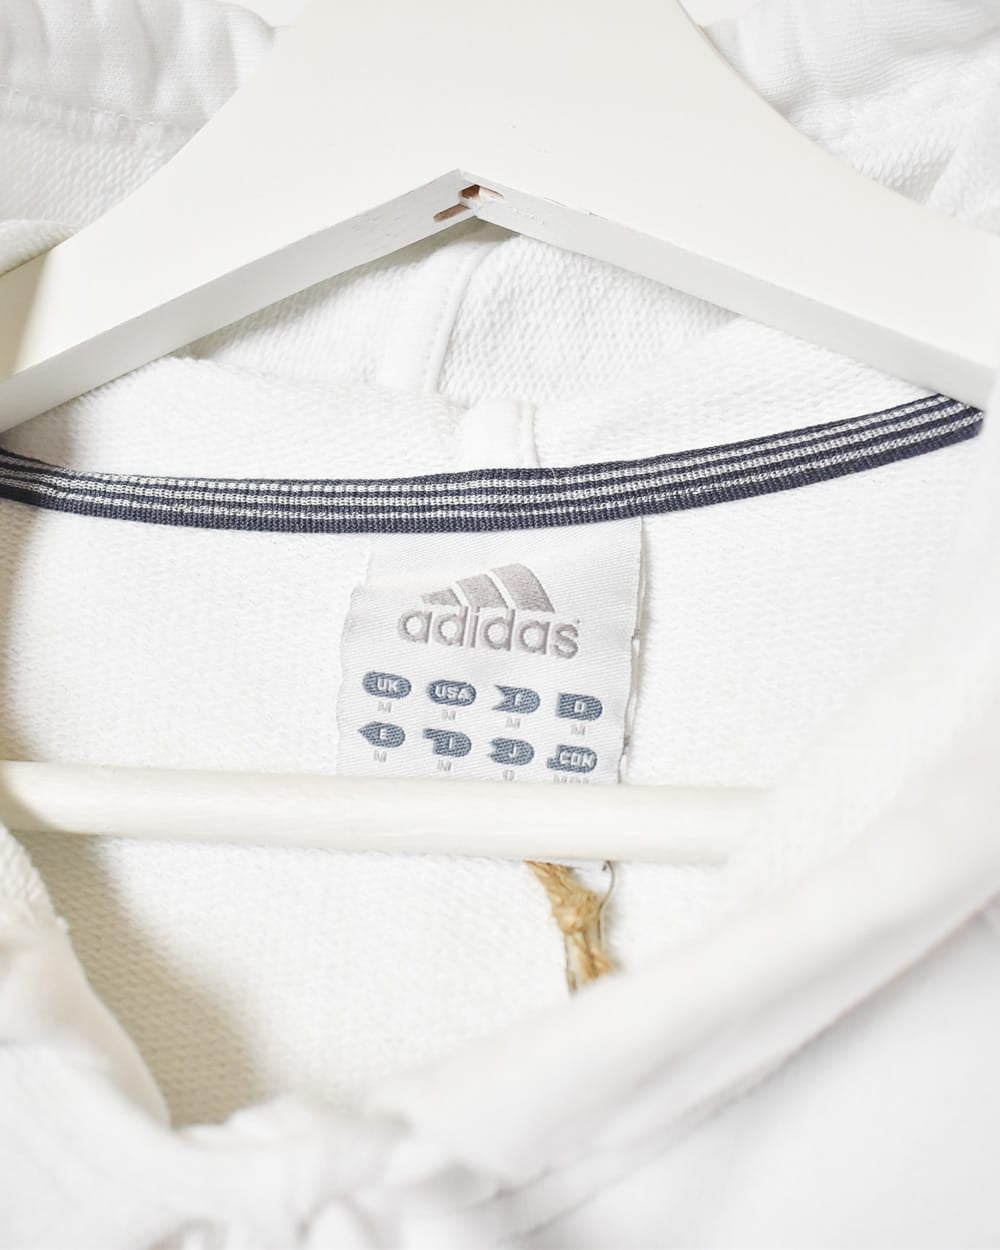 White Adidas Zip-Through Hoodie - Medium